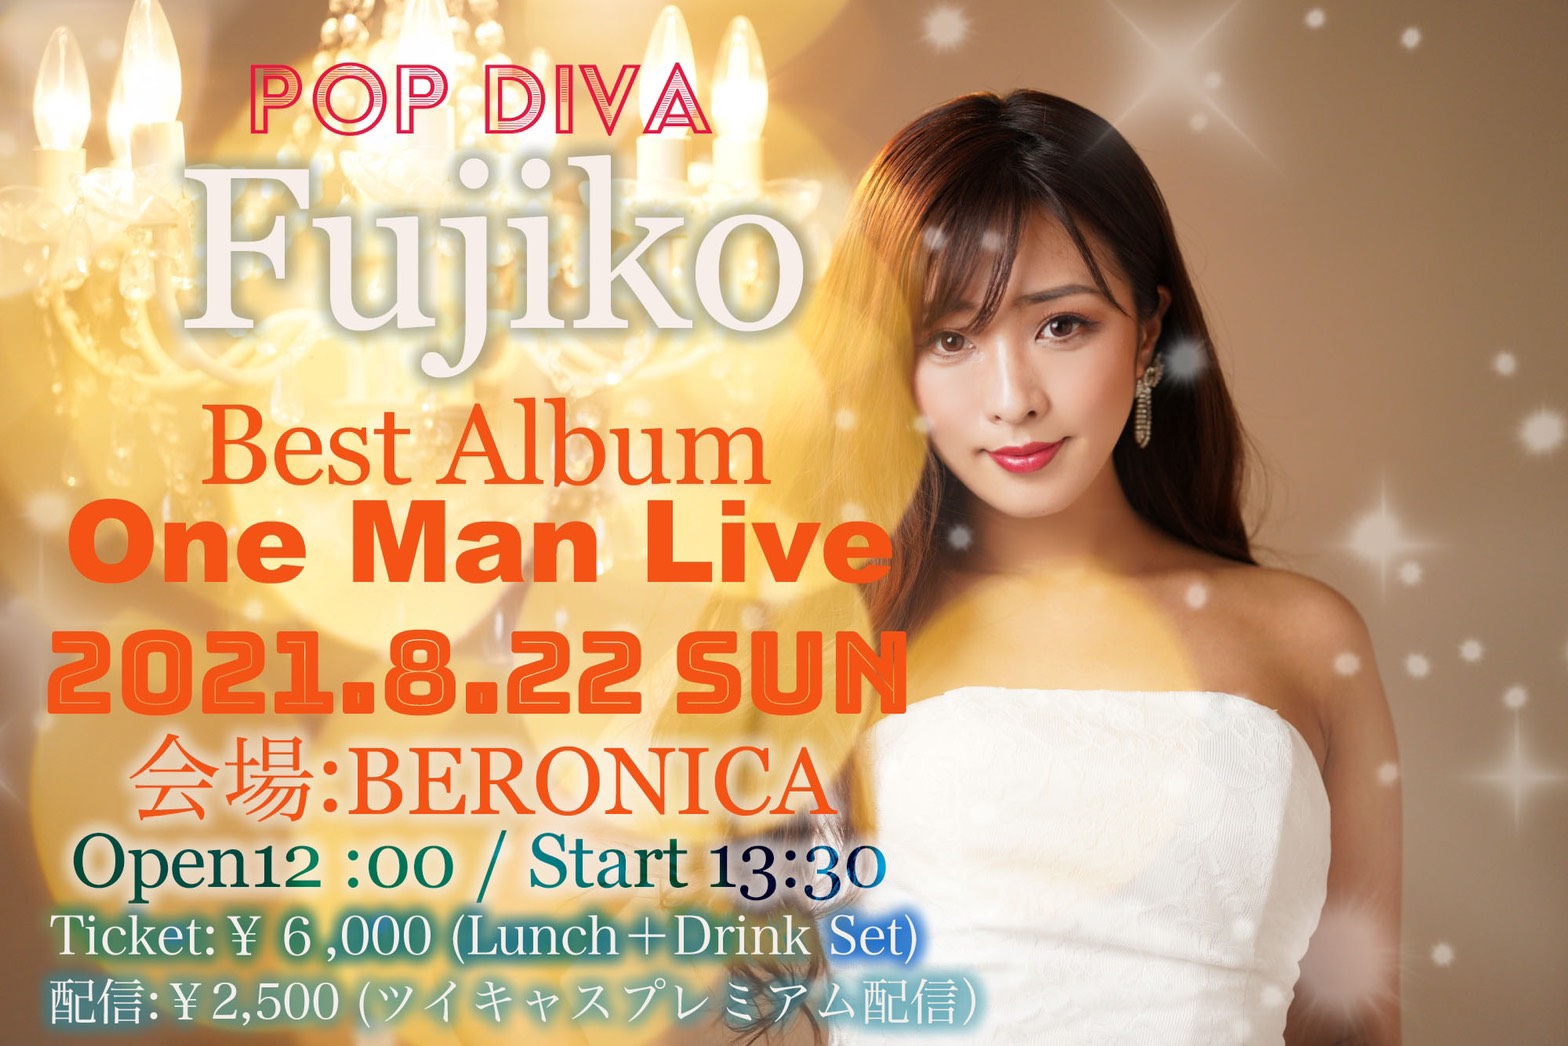 8/22 開催 【POP DIVA Fujiko Best Album One Man Live】